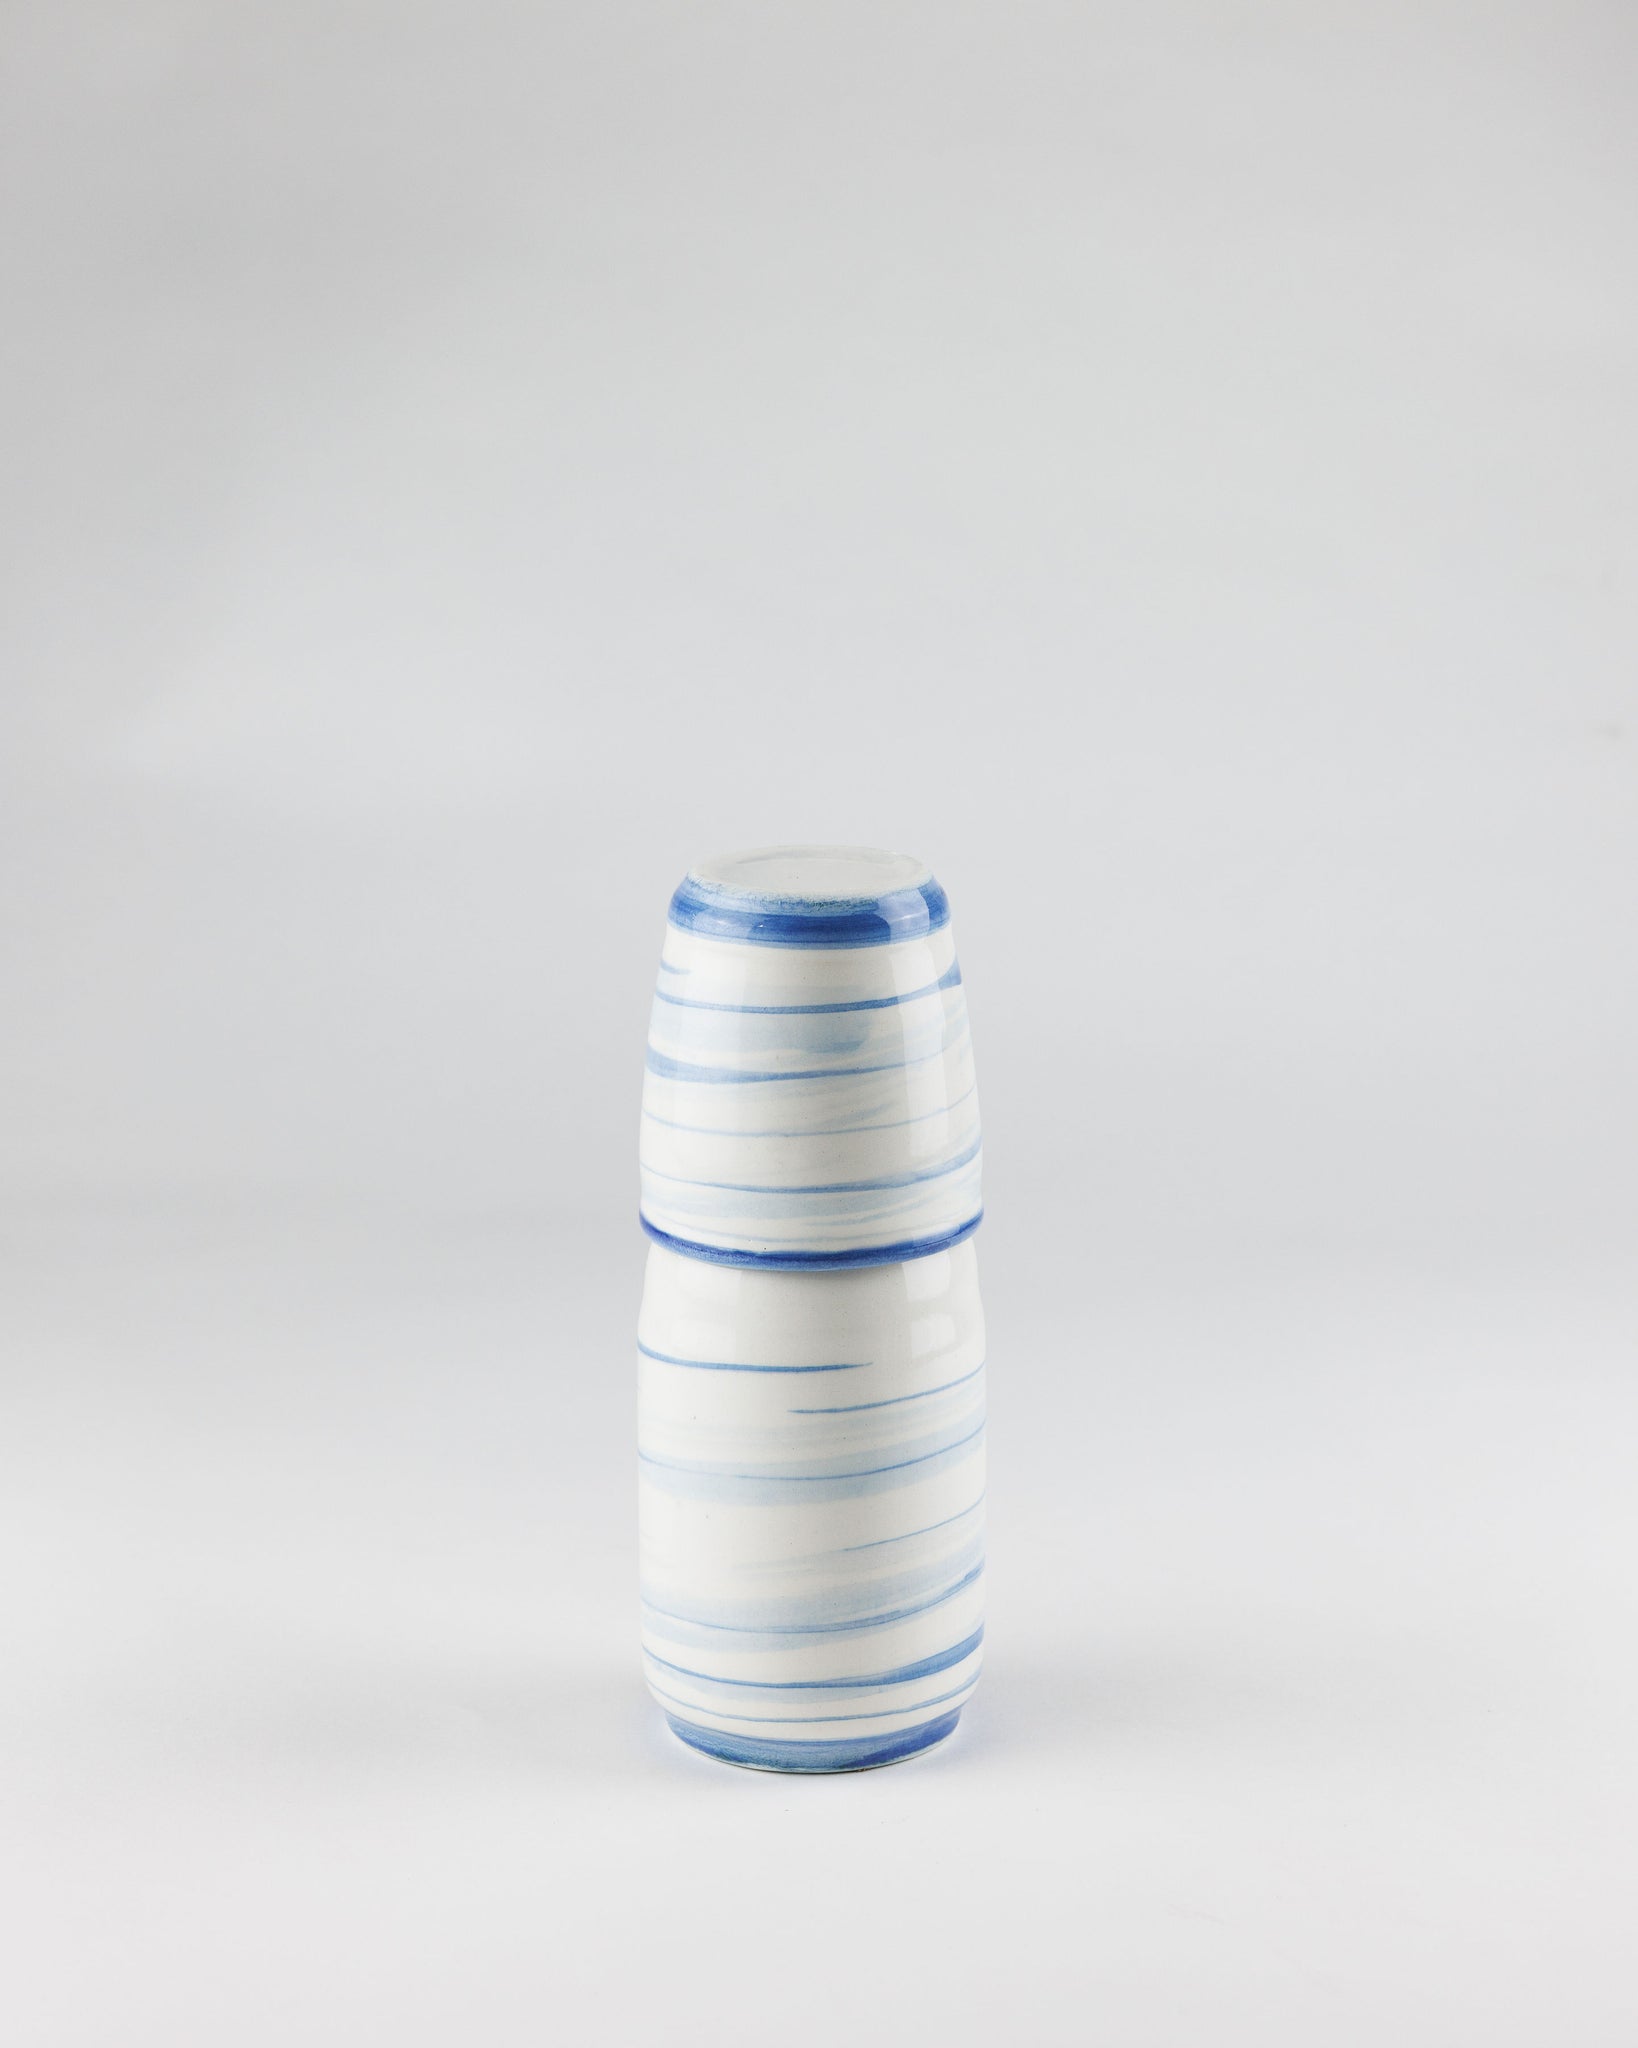 Ceramic Carafe Set: 1 Carafe + 2 Cups